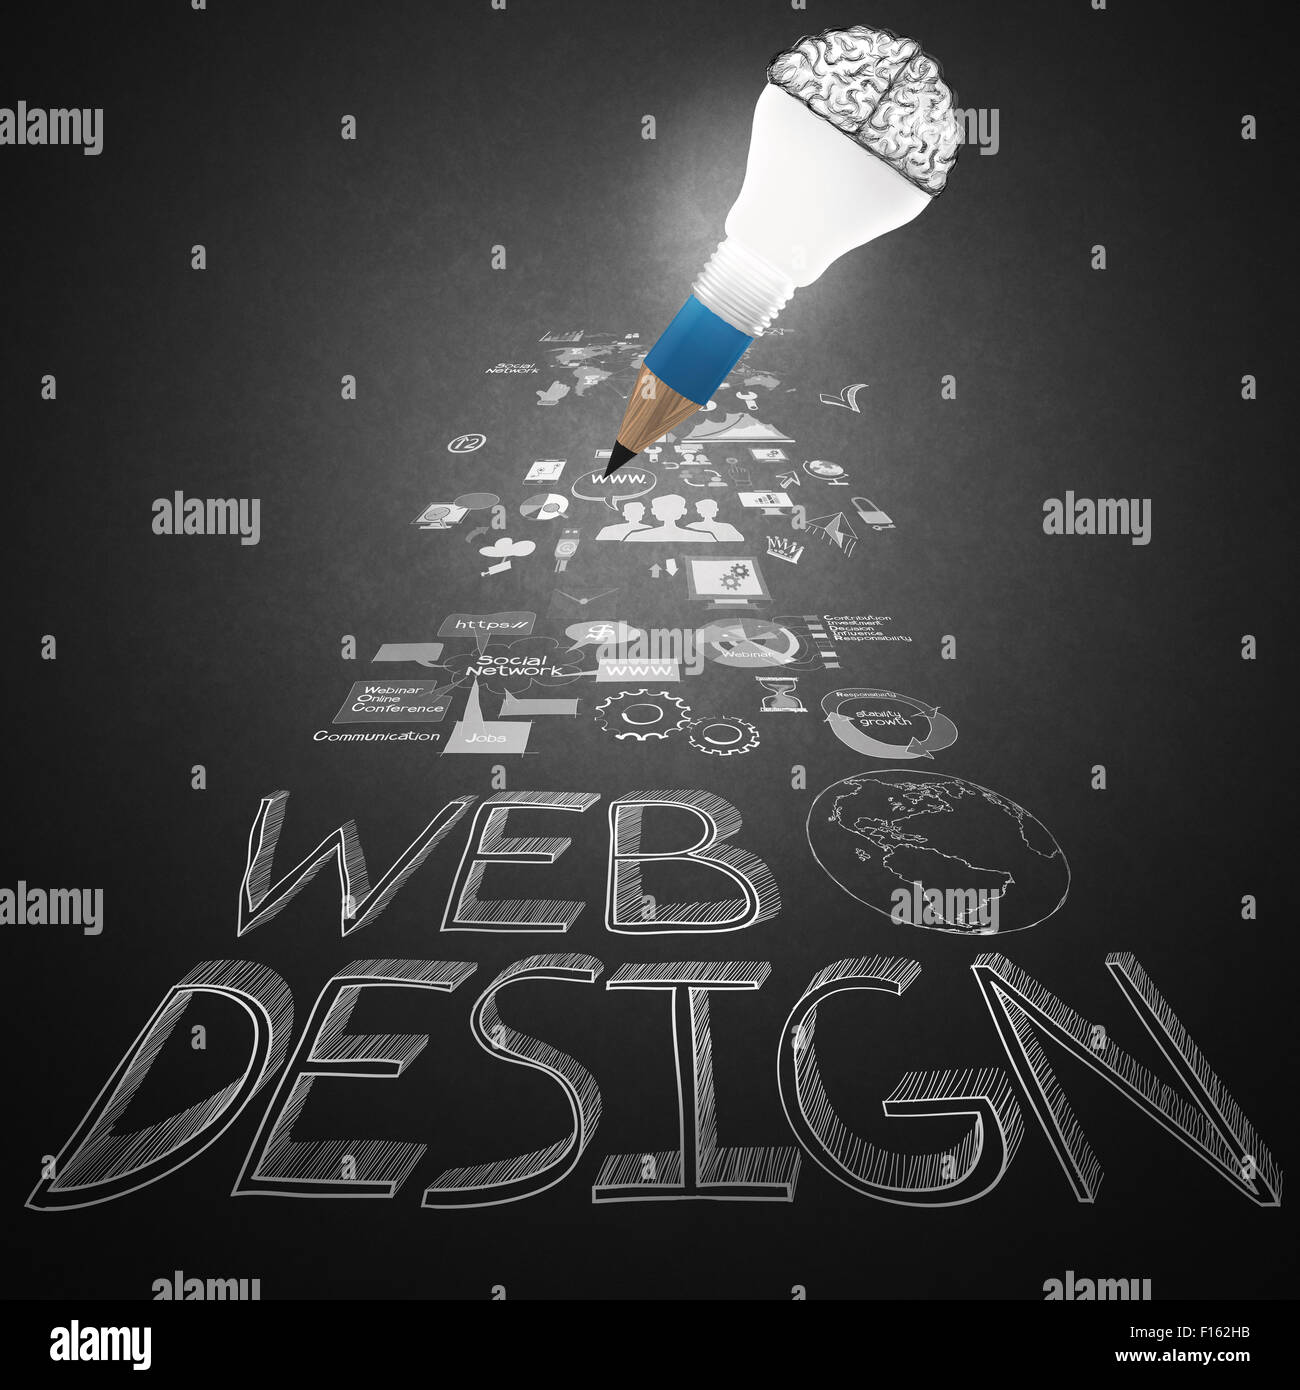 creative design hand drawn web icon as pencil lightbulb brain 3d as web design concept Stock Photo